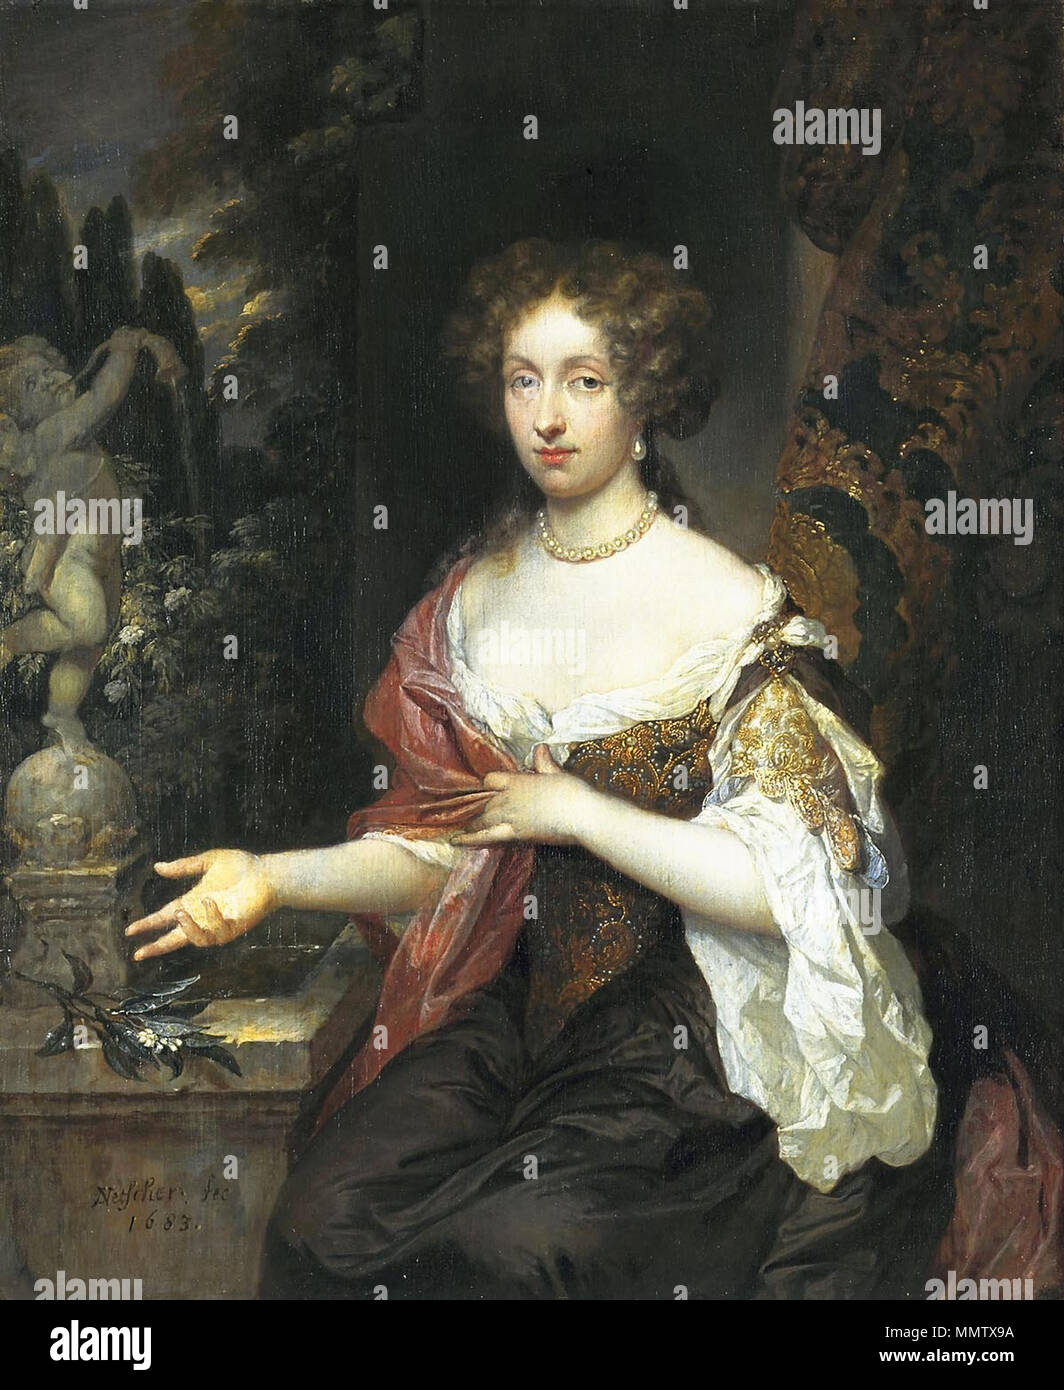 . Pendente di File:Caspar Netscher 005.jpg ritratto di Maria Timmers (1658-1753). 1683. Caspar Netscher - Portret van Maria Timmers Foto Stock